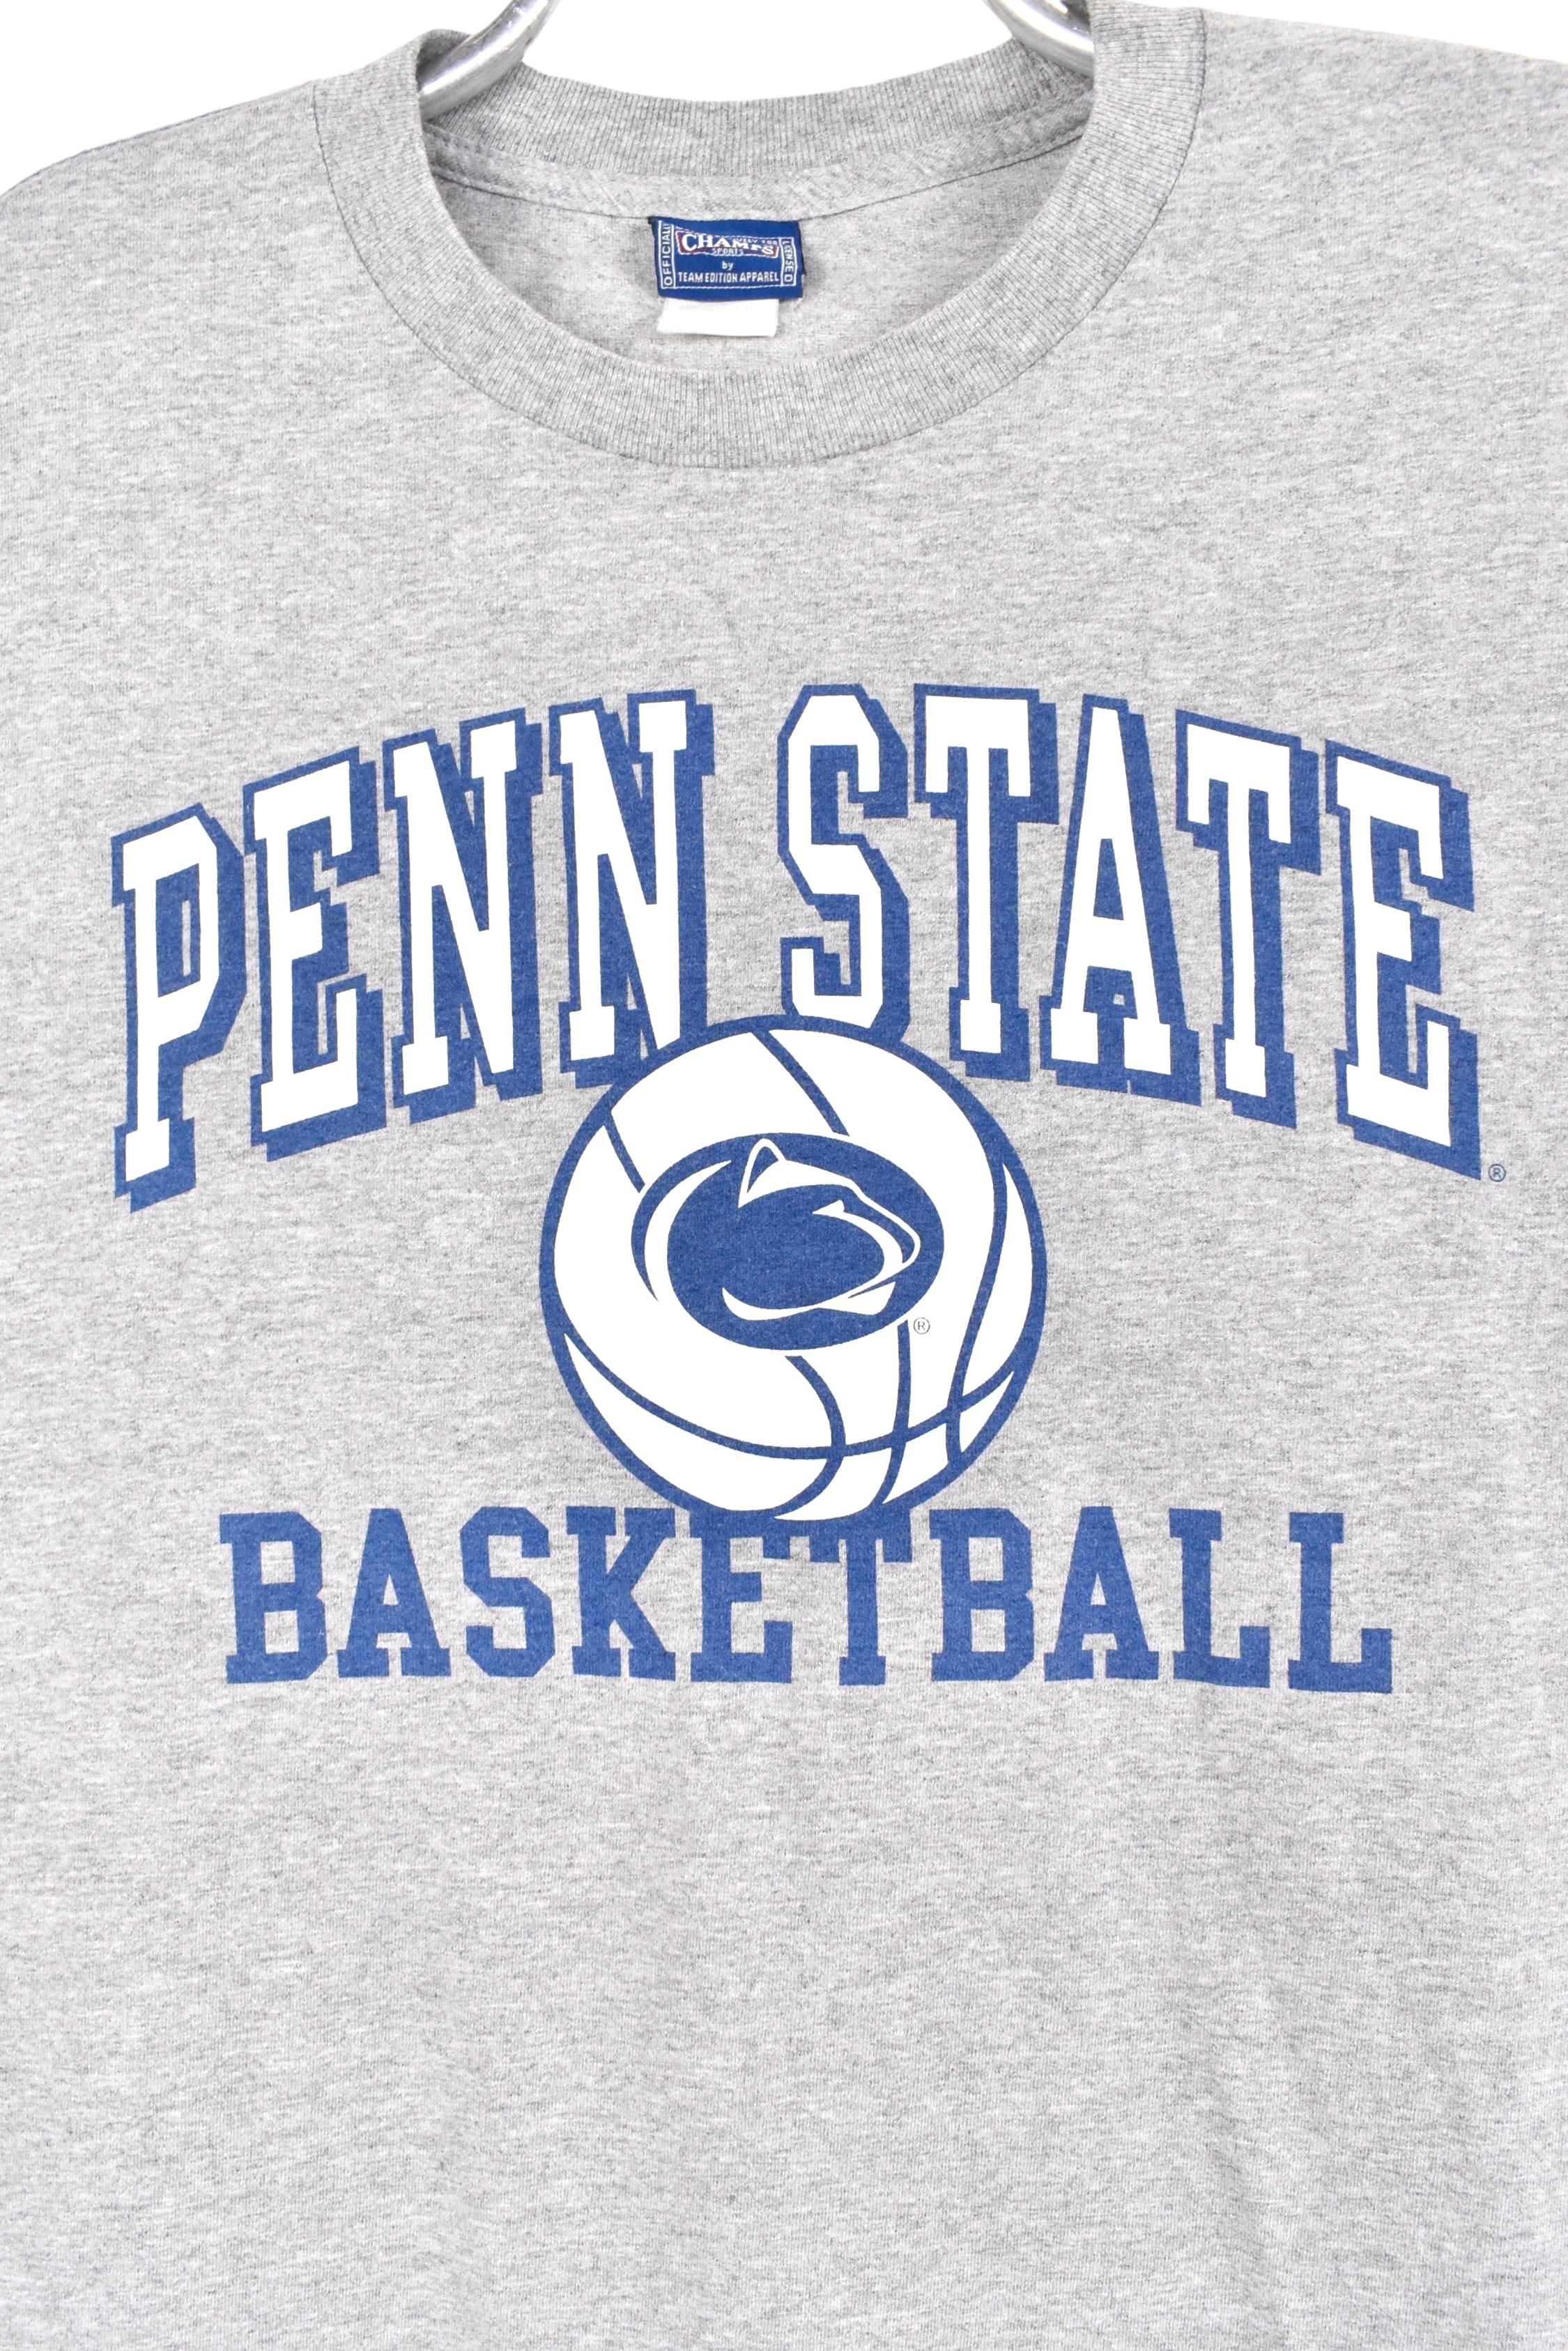 Vintage Penn State University shirt, grey graphic tee - AU XXL COLLEGE